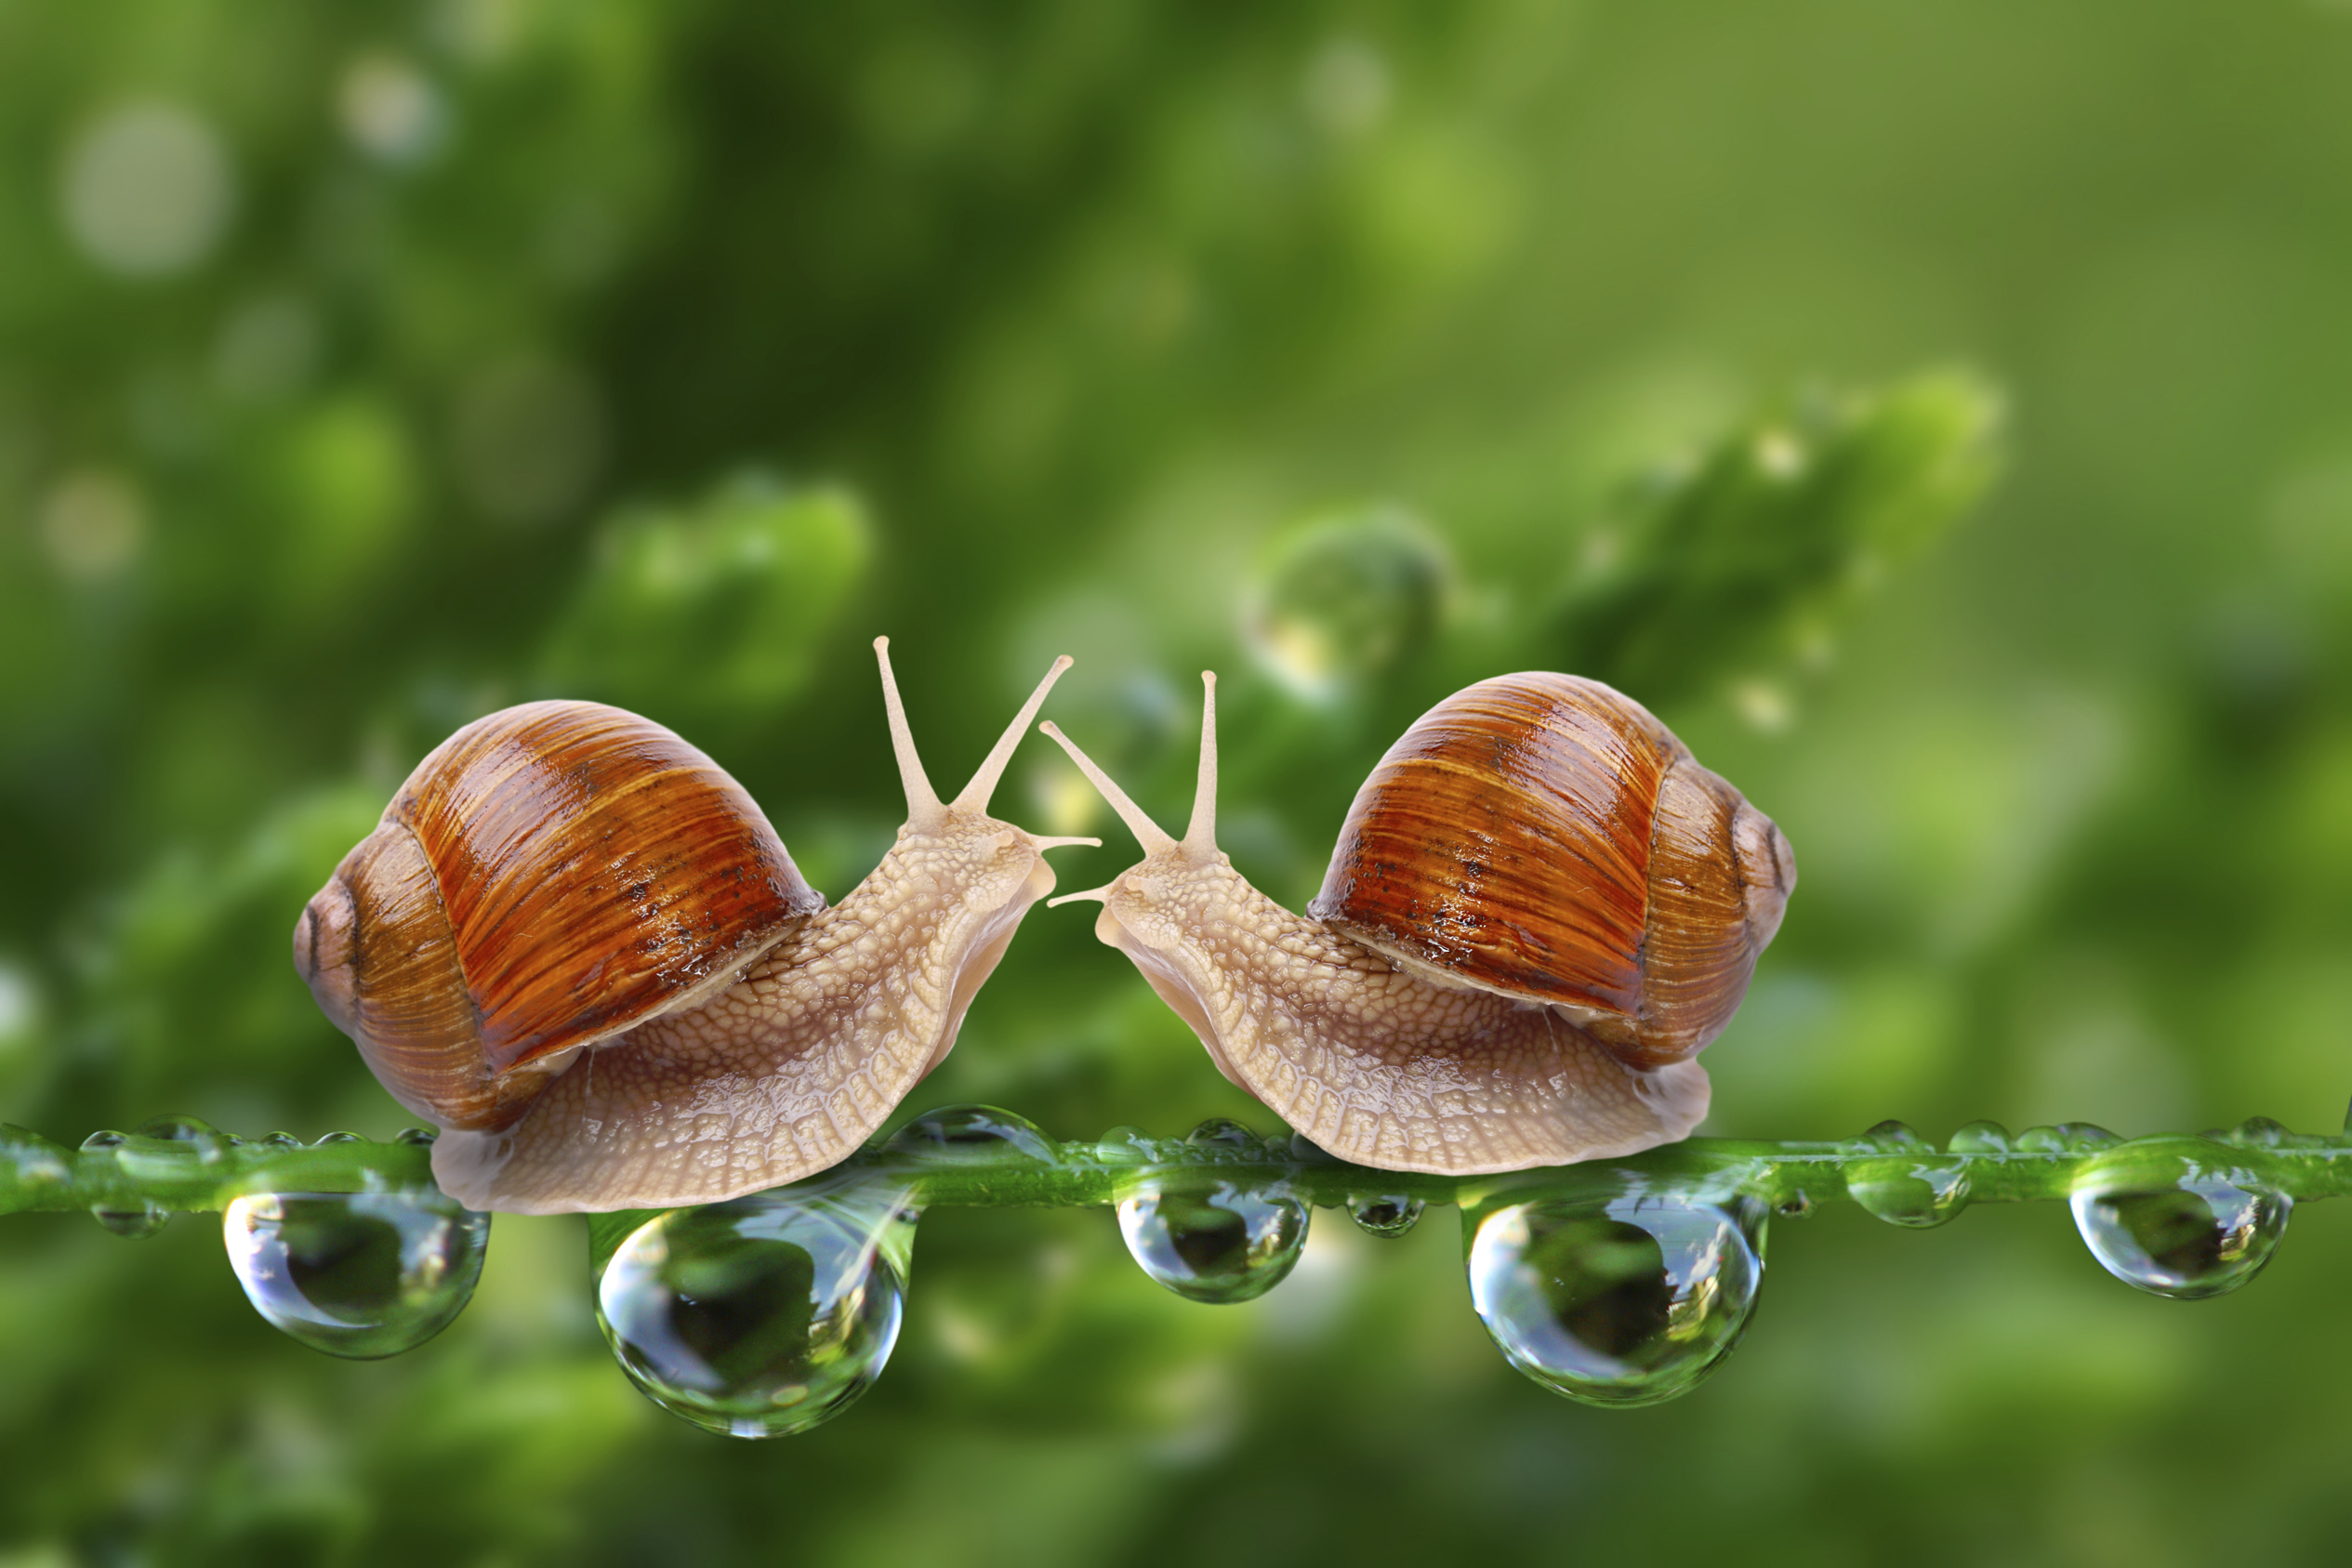 Do snails like sunlight or shade?